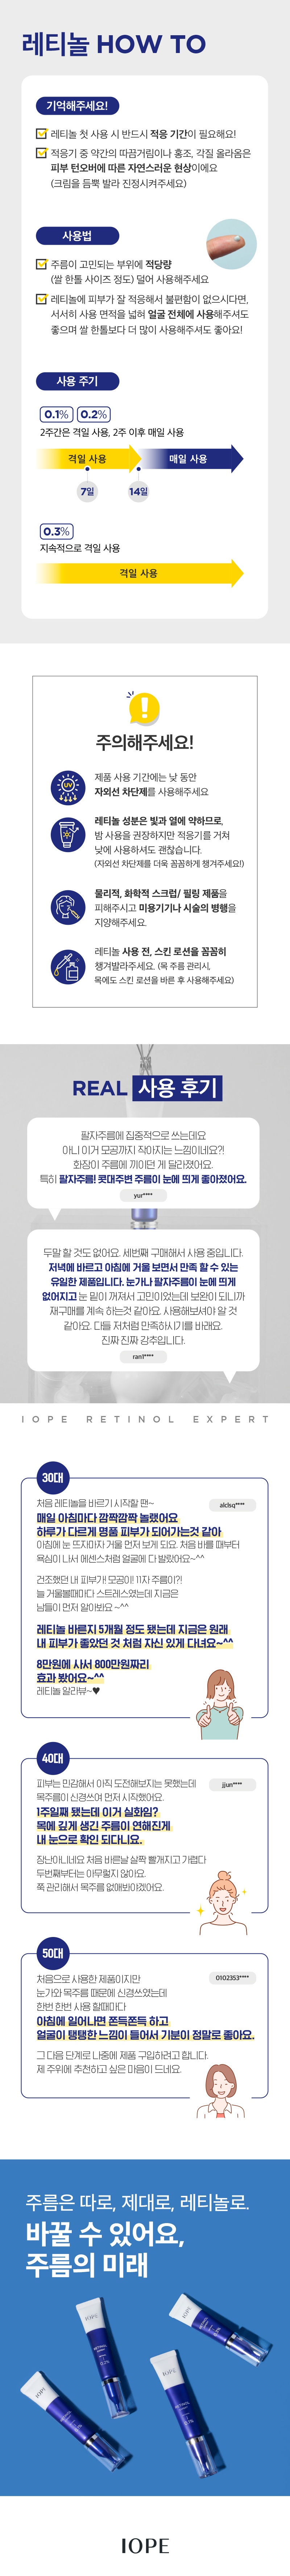 IOPE Retinol Expert 0.2% korean skincare product online sho malaysia China italy7